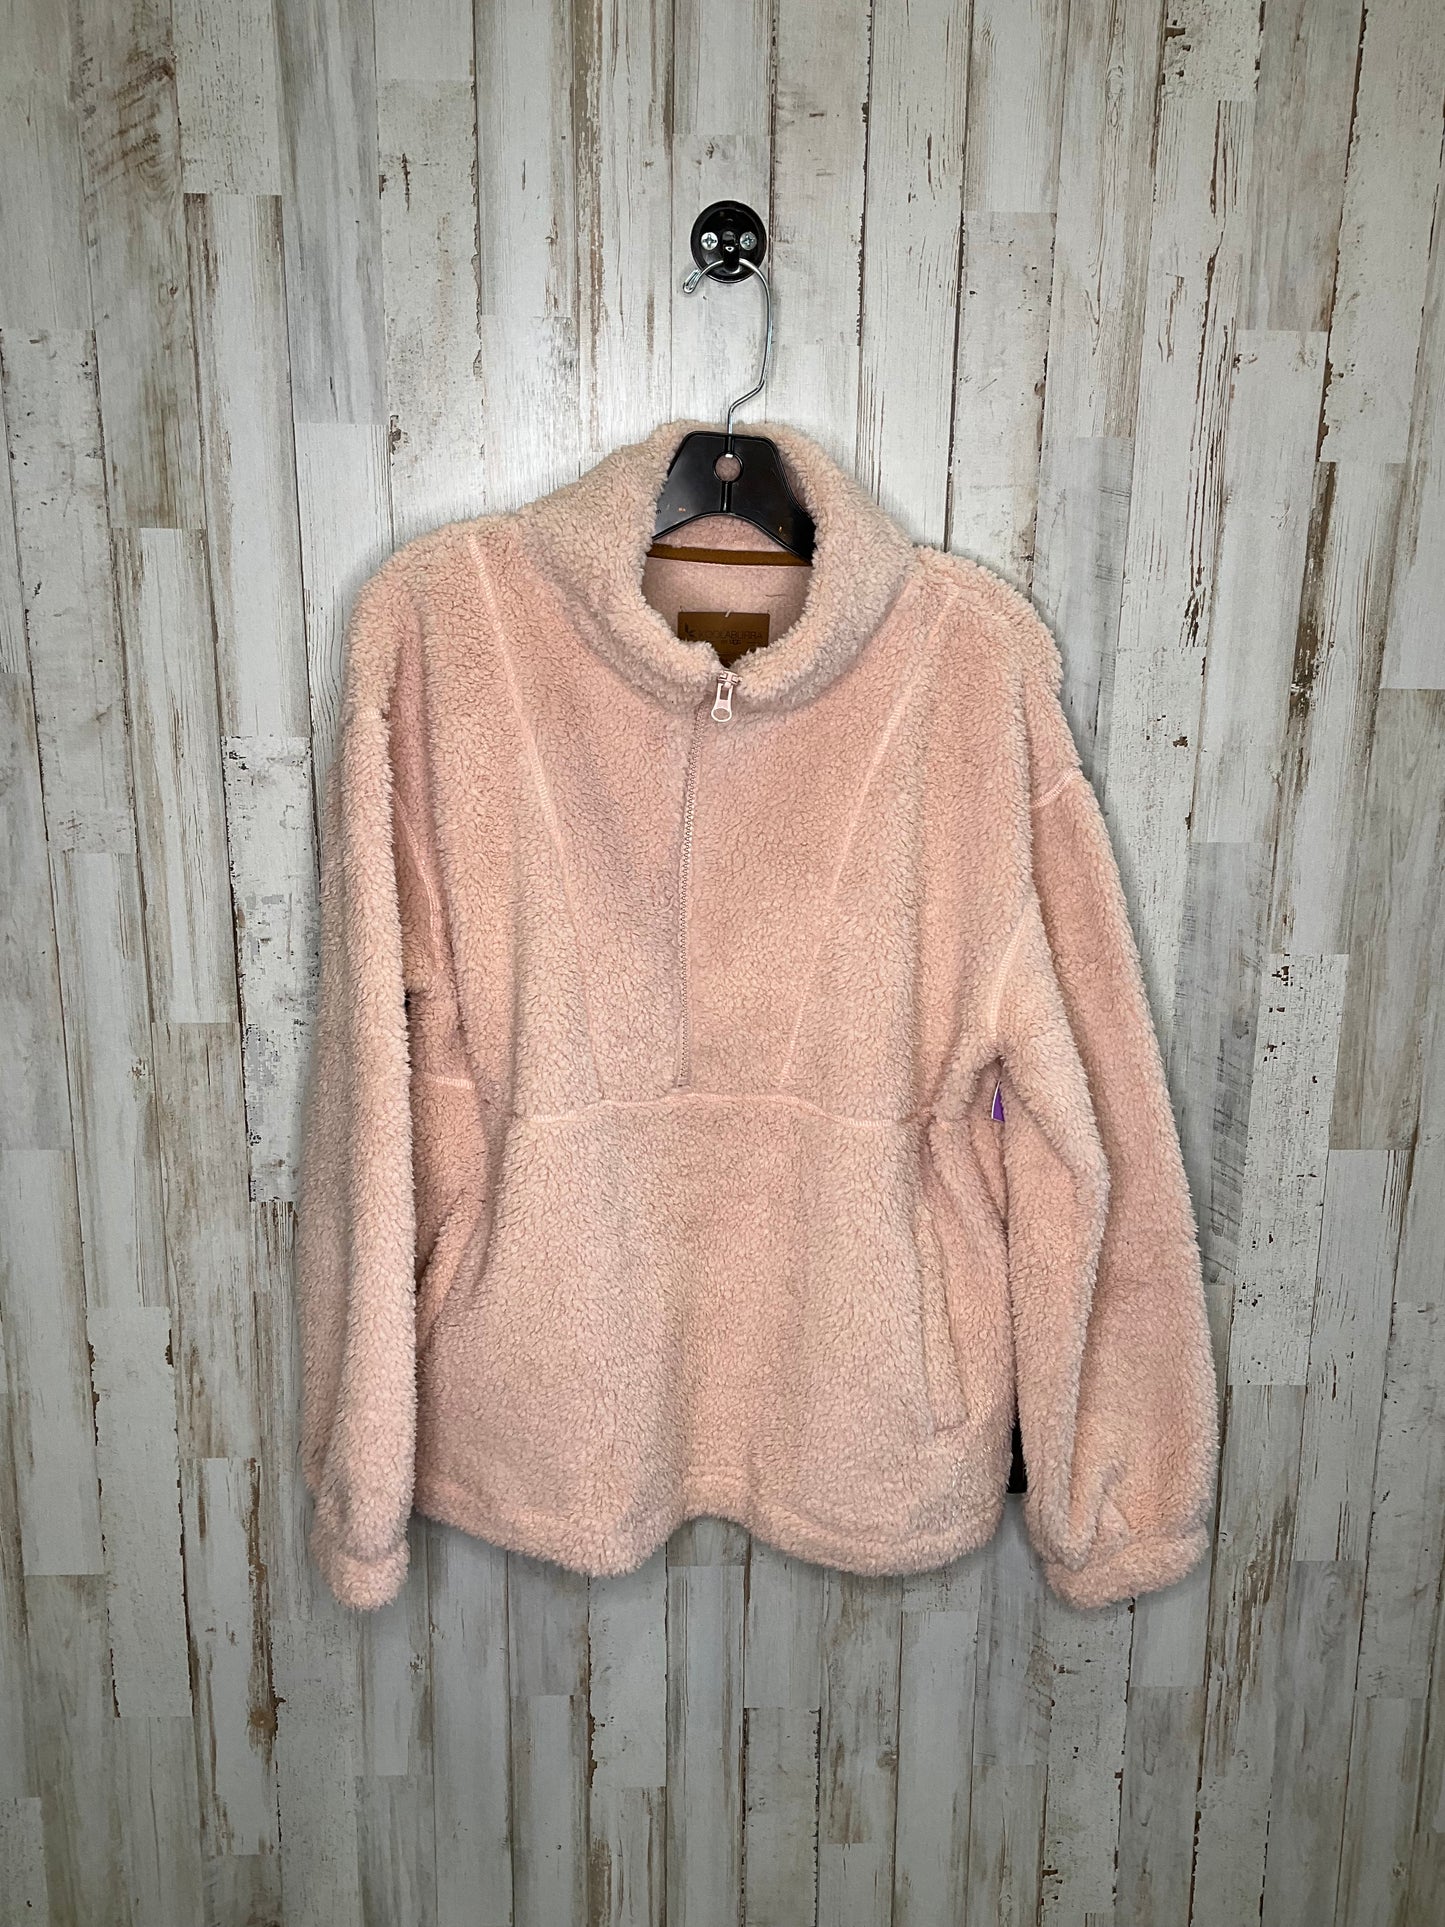 Sweatshirt Crewneck By Koolaburra By Ugg  Size: M